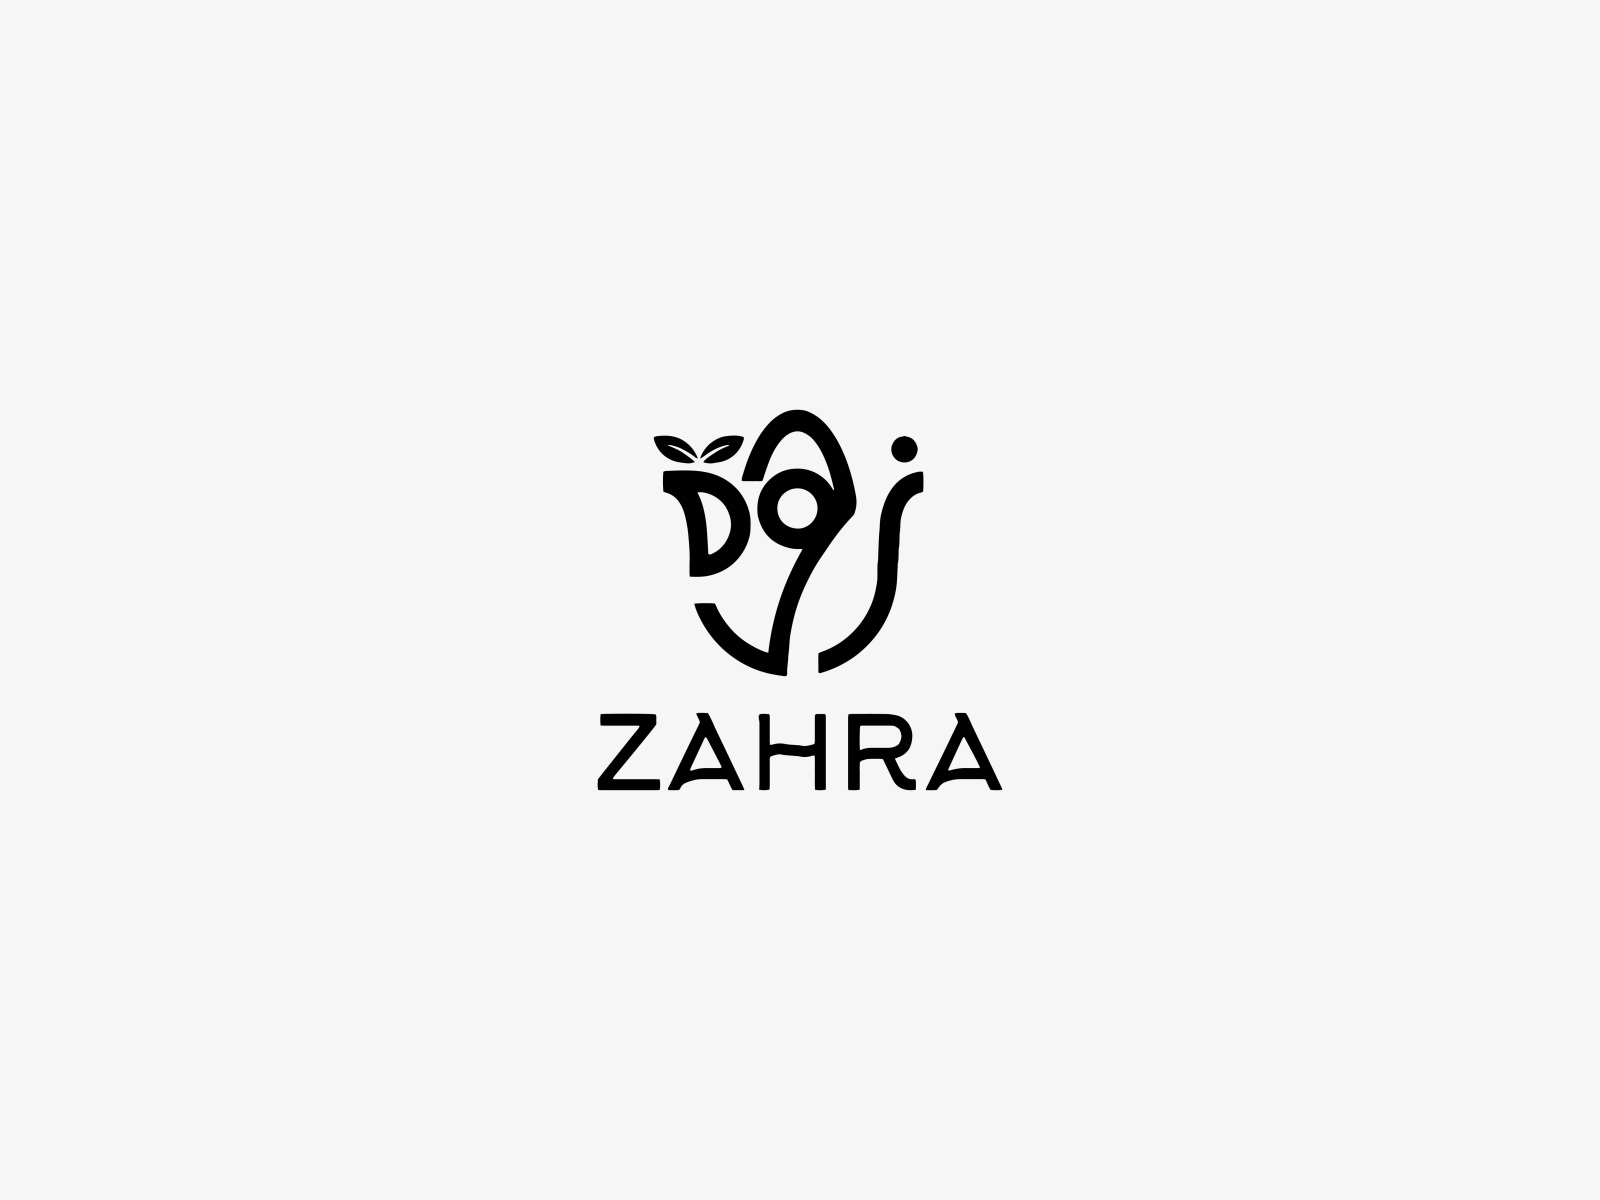 Arabic logo zahra by mohamed abuzaid on Dribbble